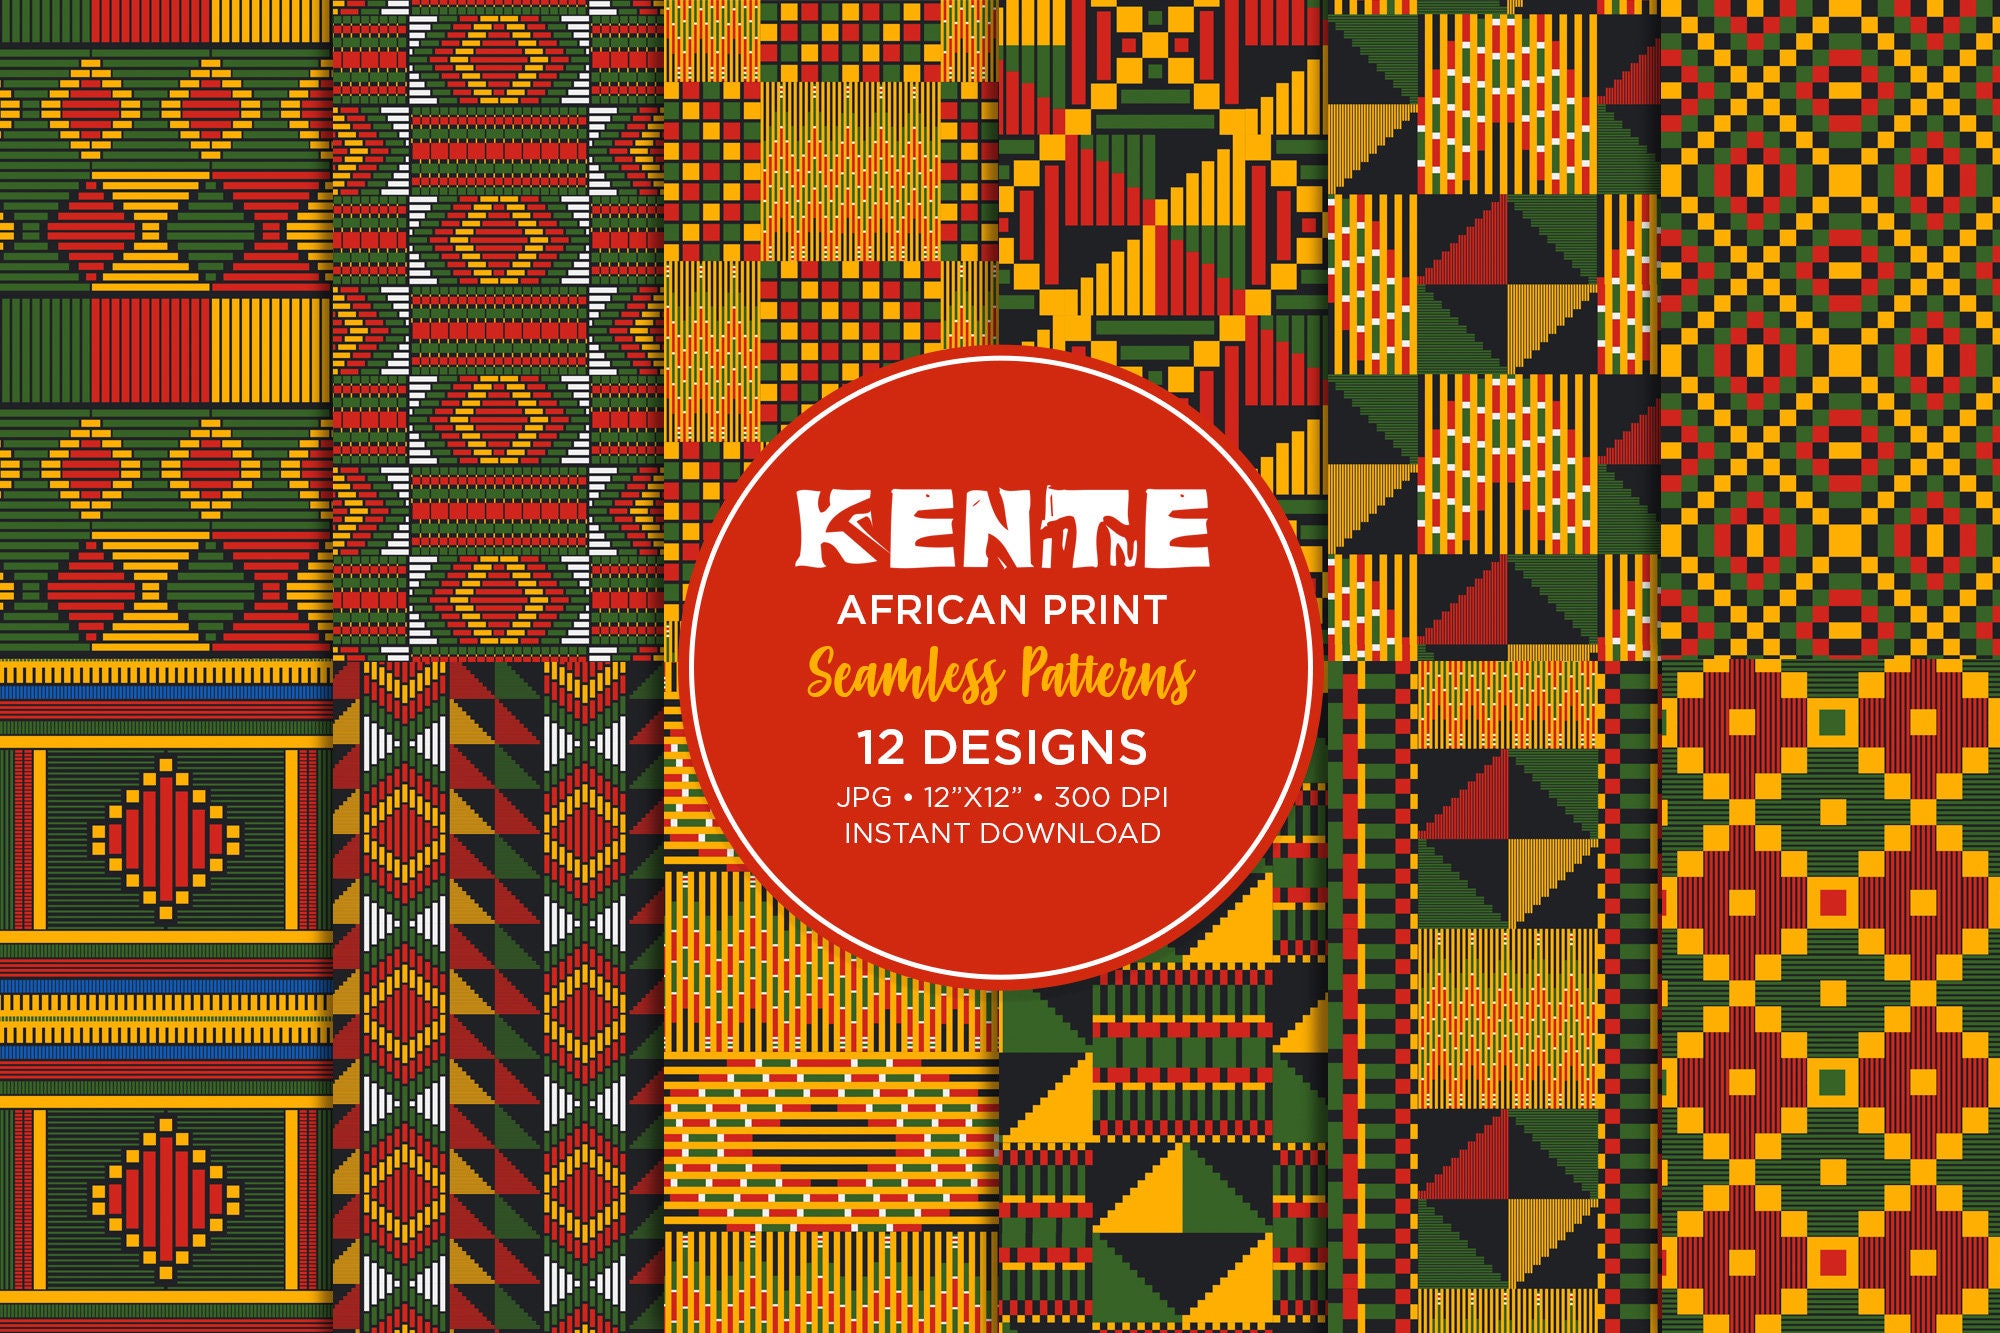 African Pattern | Authentic Kente Cloth Pattern | African Ghana Design |  Spiral Notebook